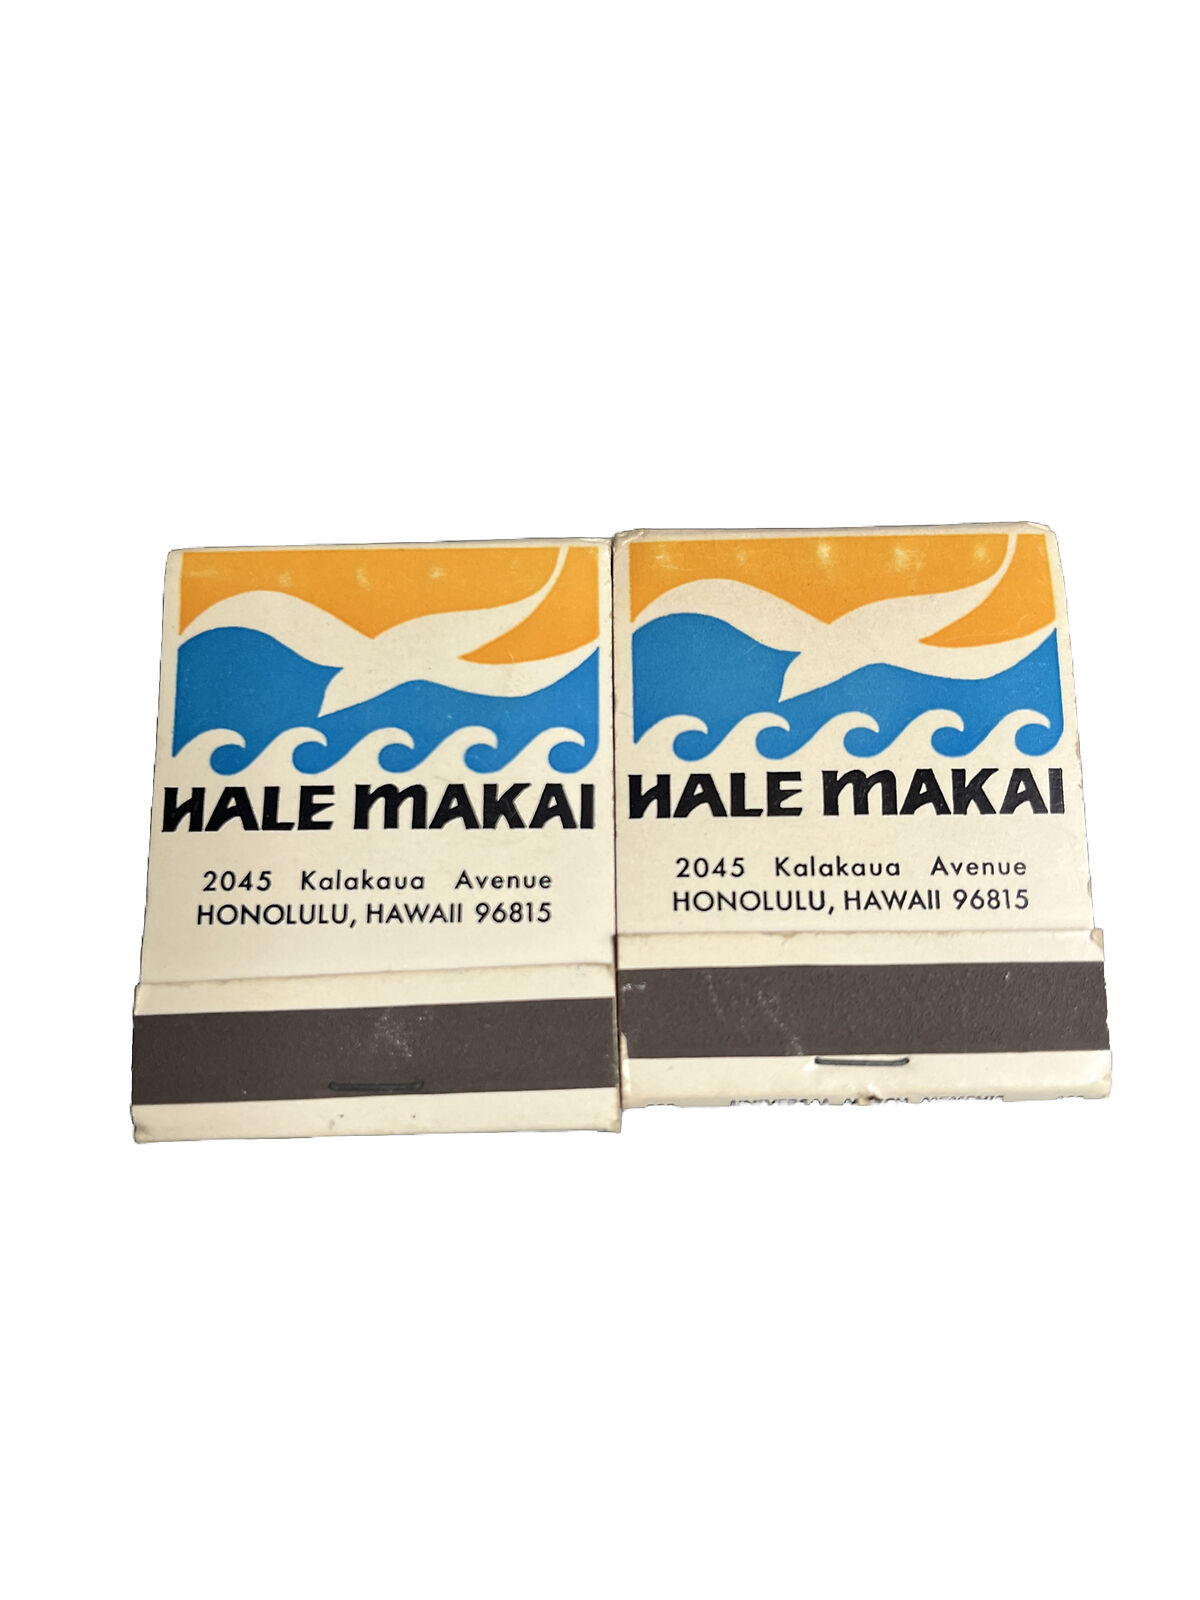 Vintage Hale Makai Hotel Restaurant Lounge Matchbook Waikiki Hawaii Advertising